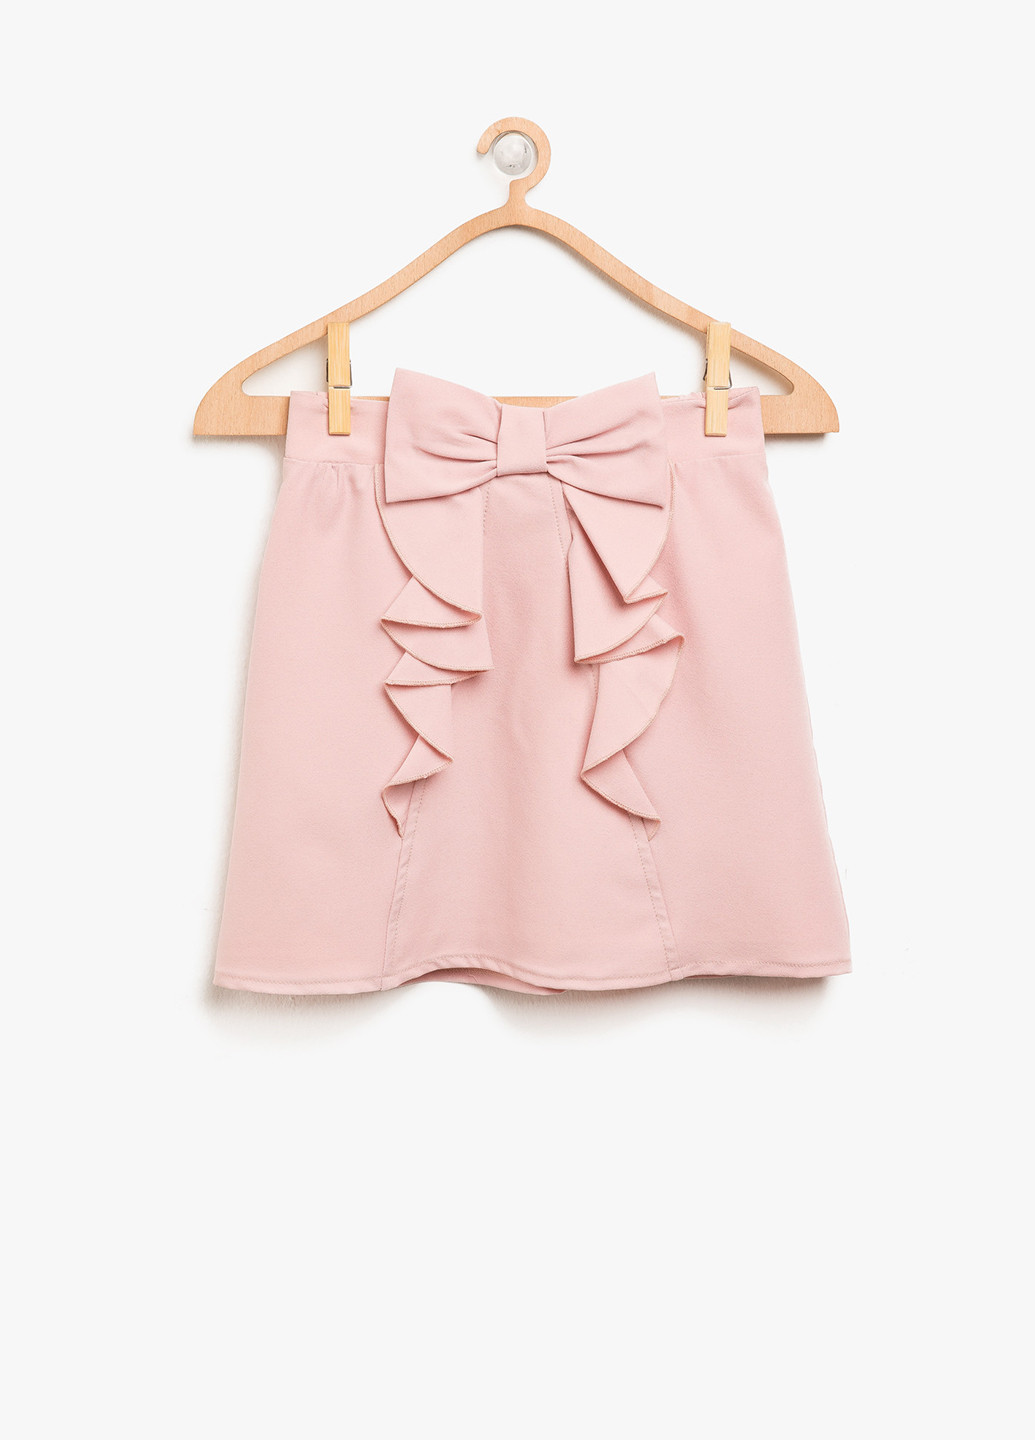 Светло-розовая кэжуал юбка KOTON а-силуэта (трапеция)